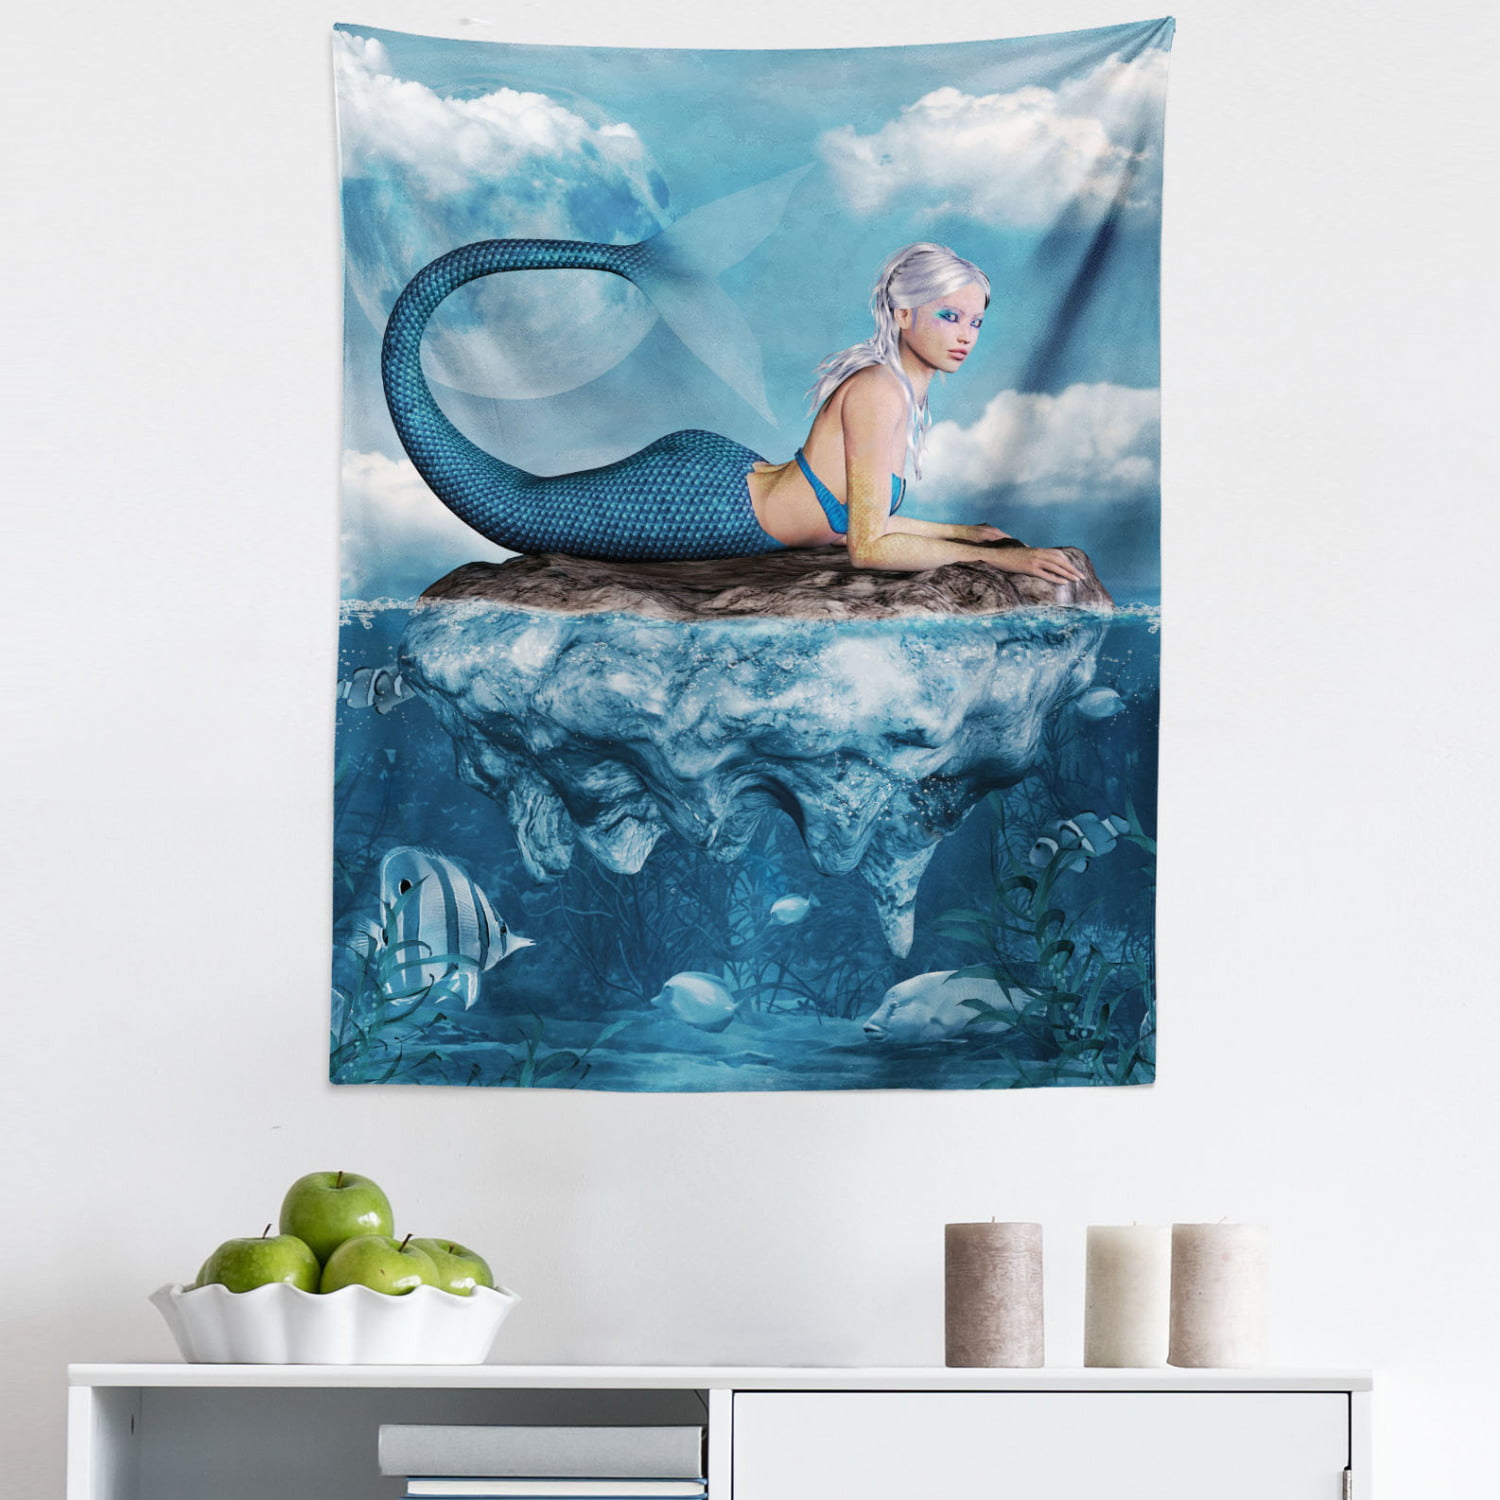 Mermaid at Sea Bird Tapestry Hippie Wall Hanging for Living Room Bedroom Dorm 